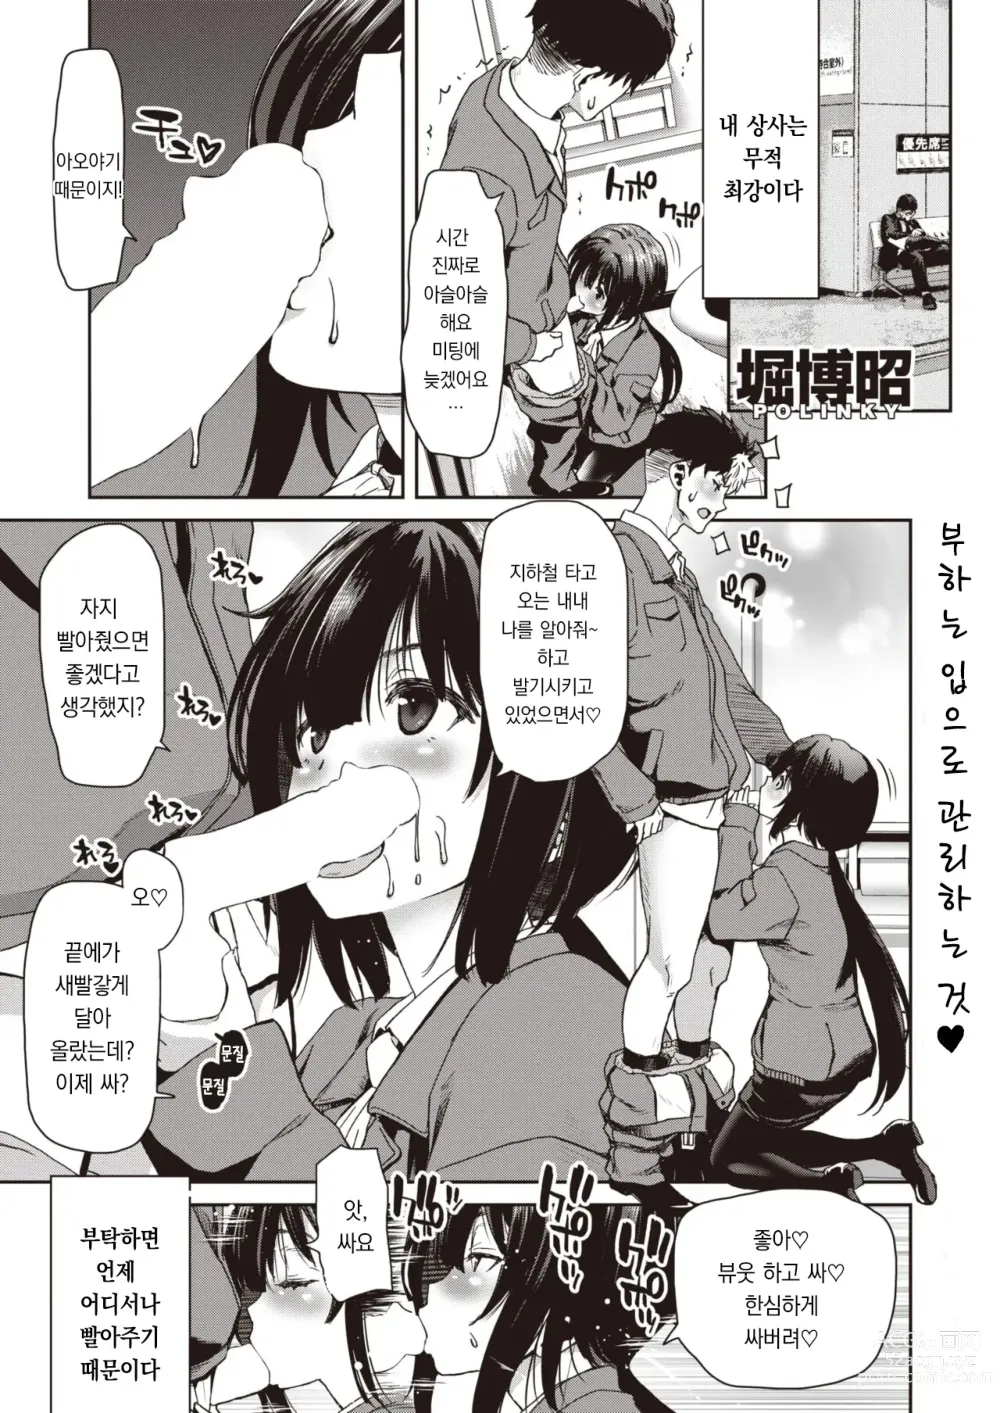 Page 2 of manga 얕보지 마!